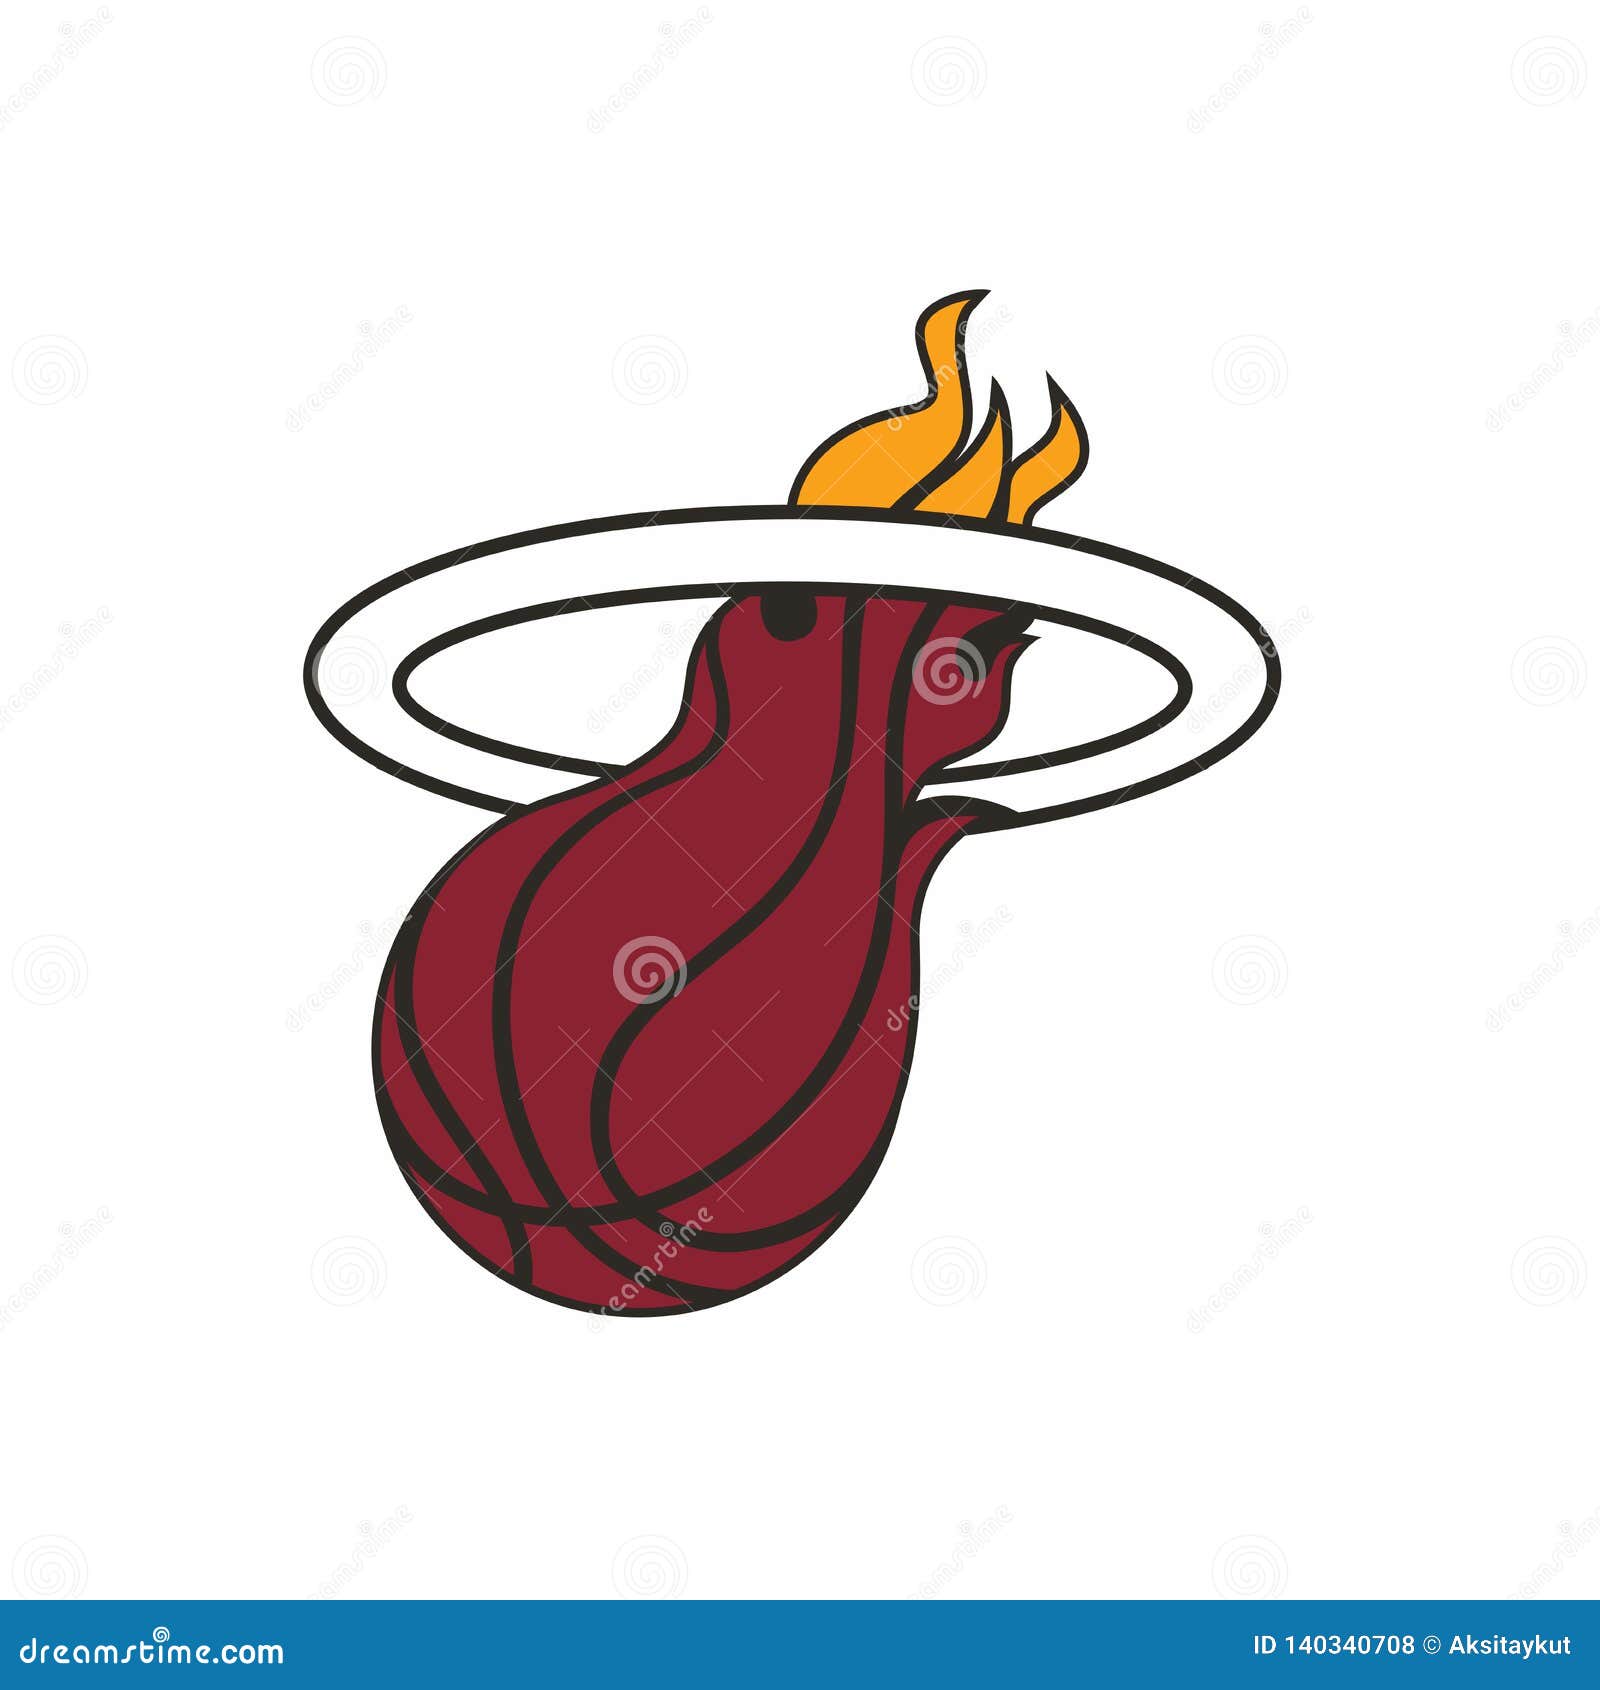 Editorial - Miami Heat NBA editorial stock photo. Illustration of ...